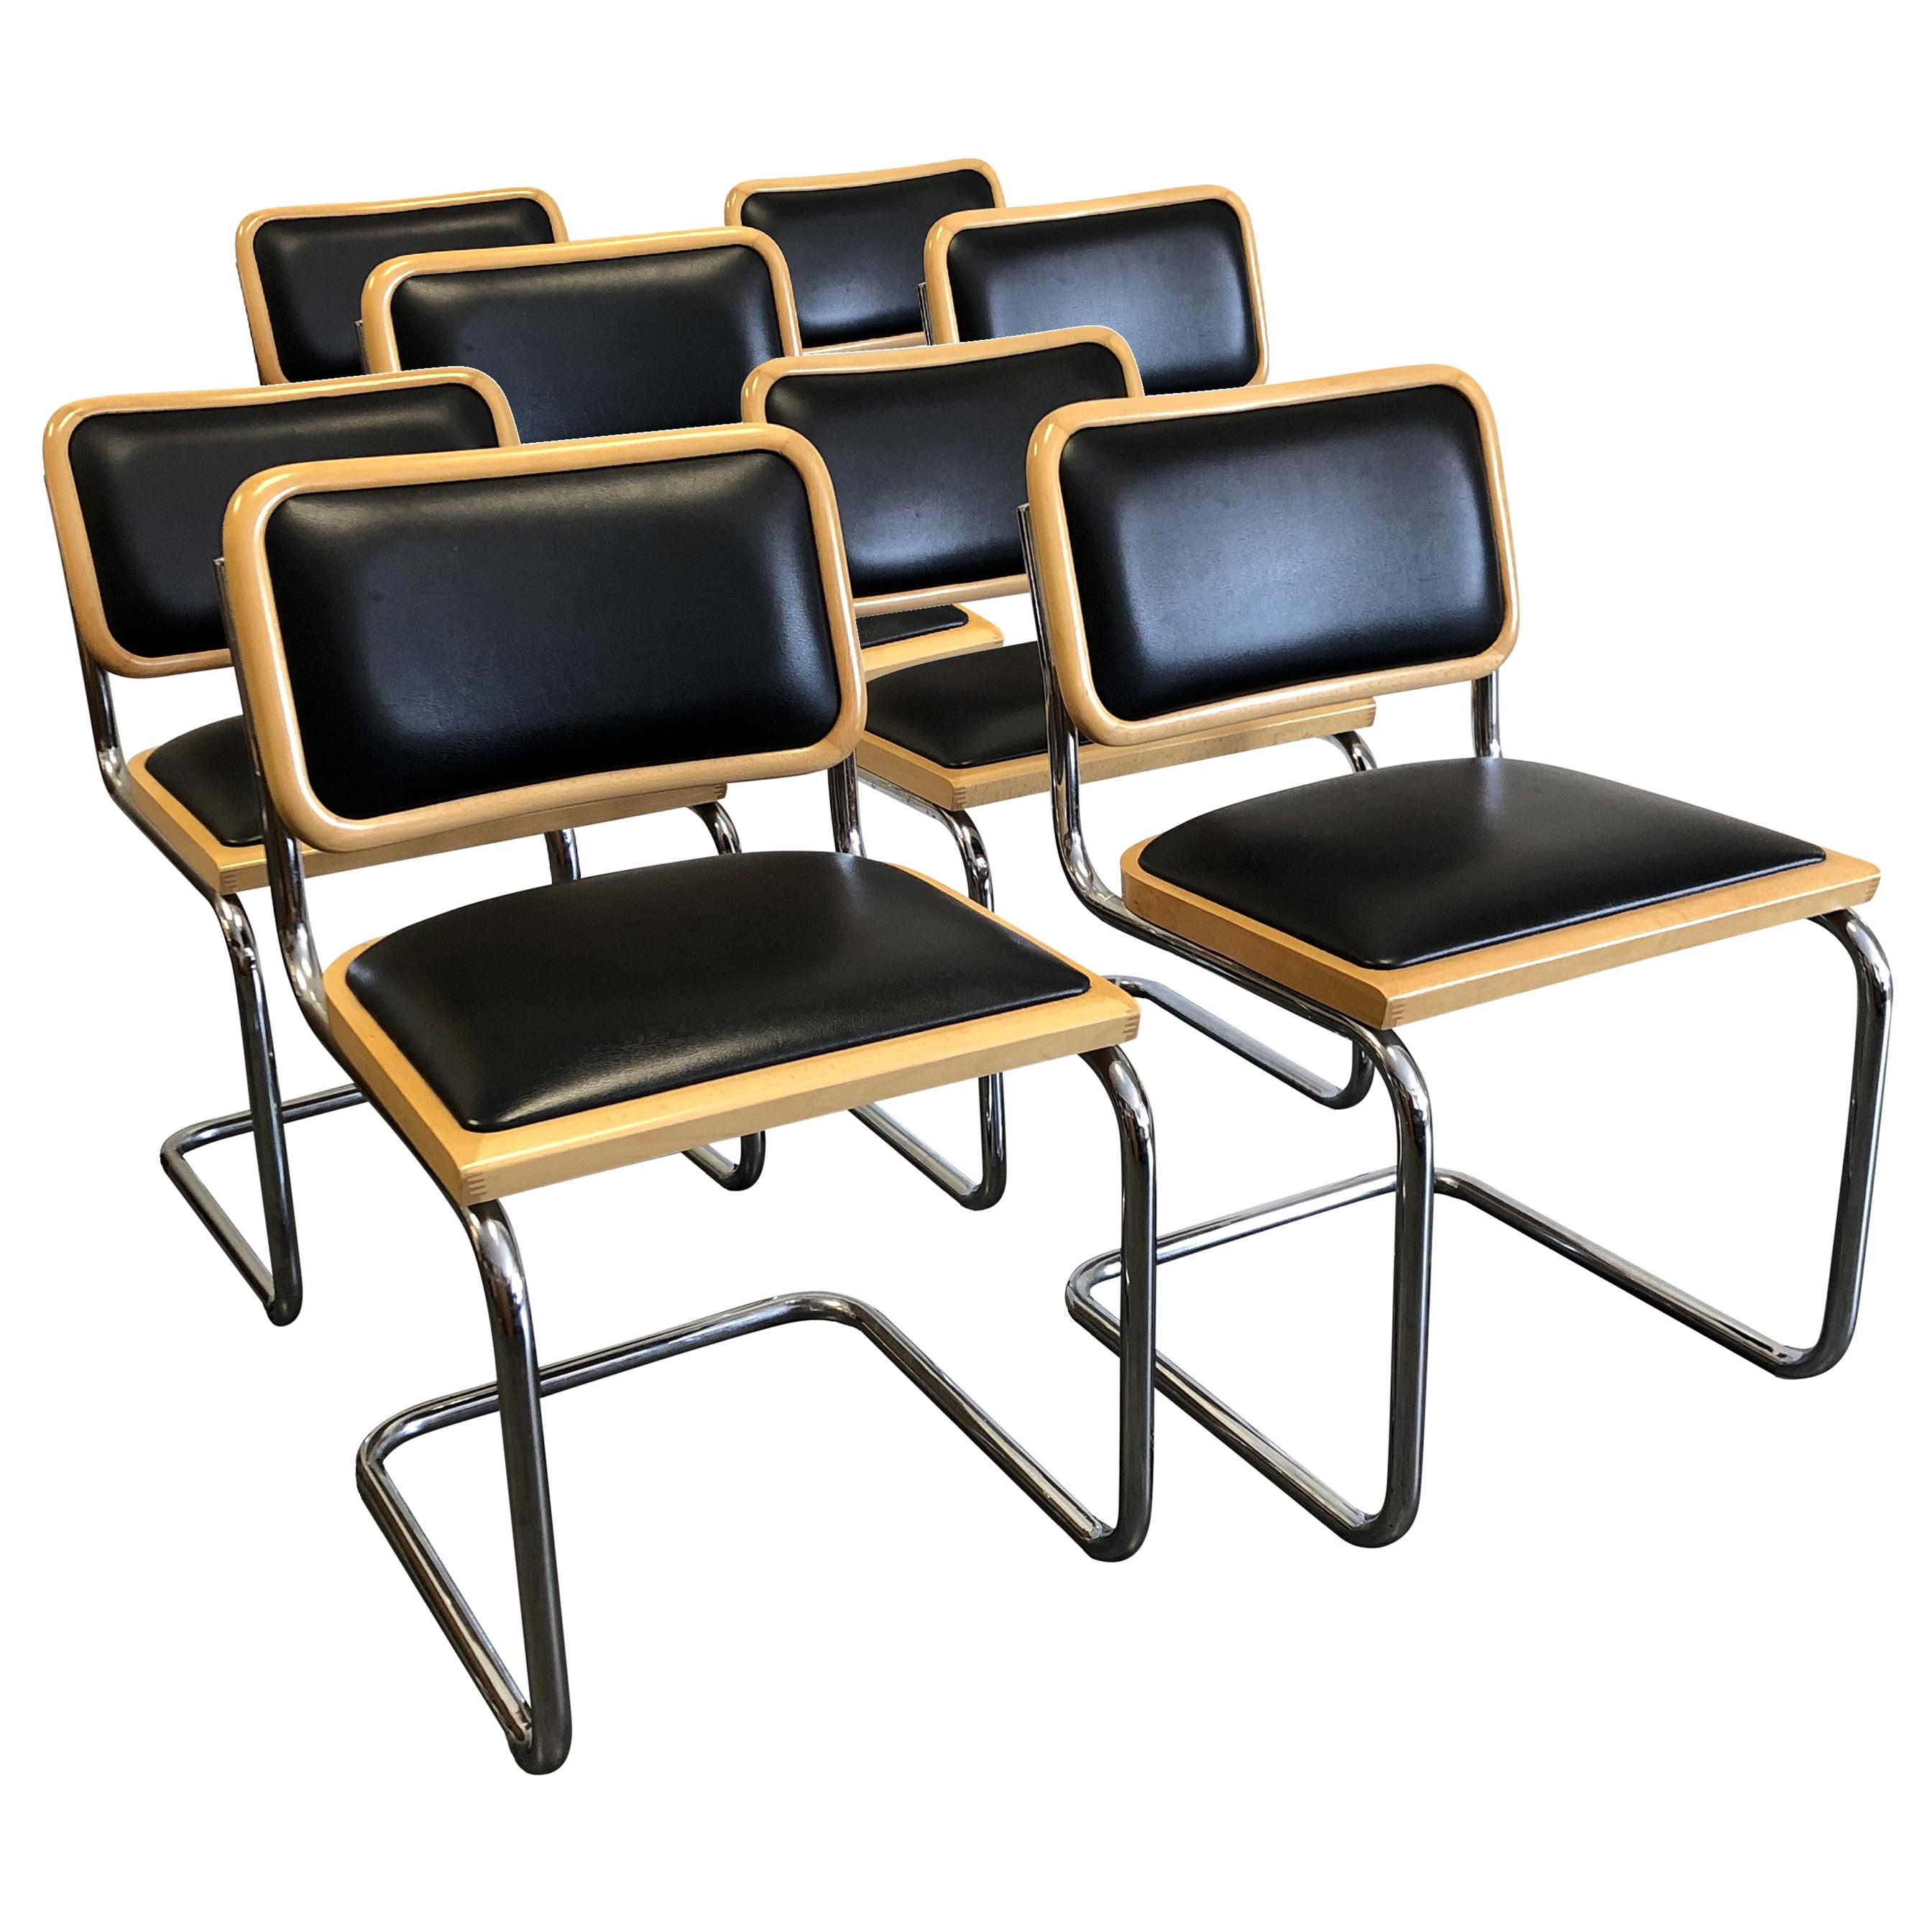 Eight Black Marcel Breuer Style "Cesca" Chairs